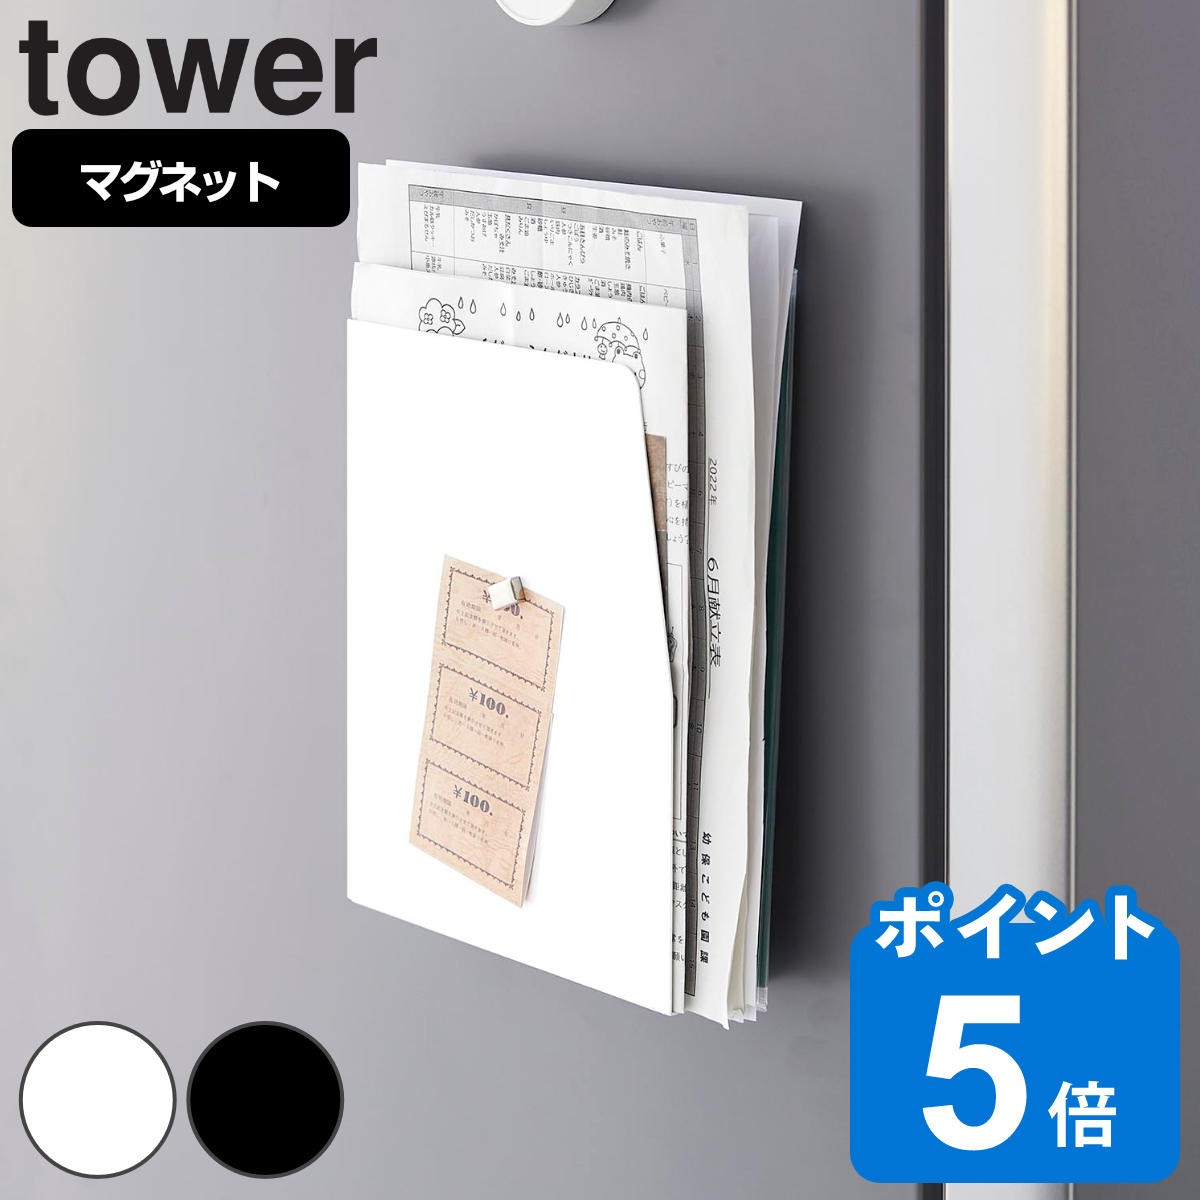 R tower }OlbgvgP[X ^[